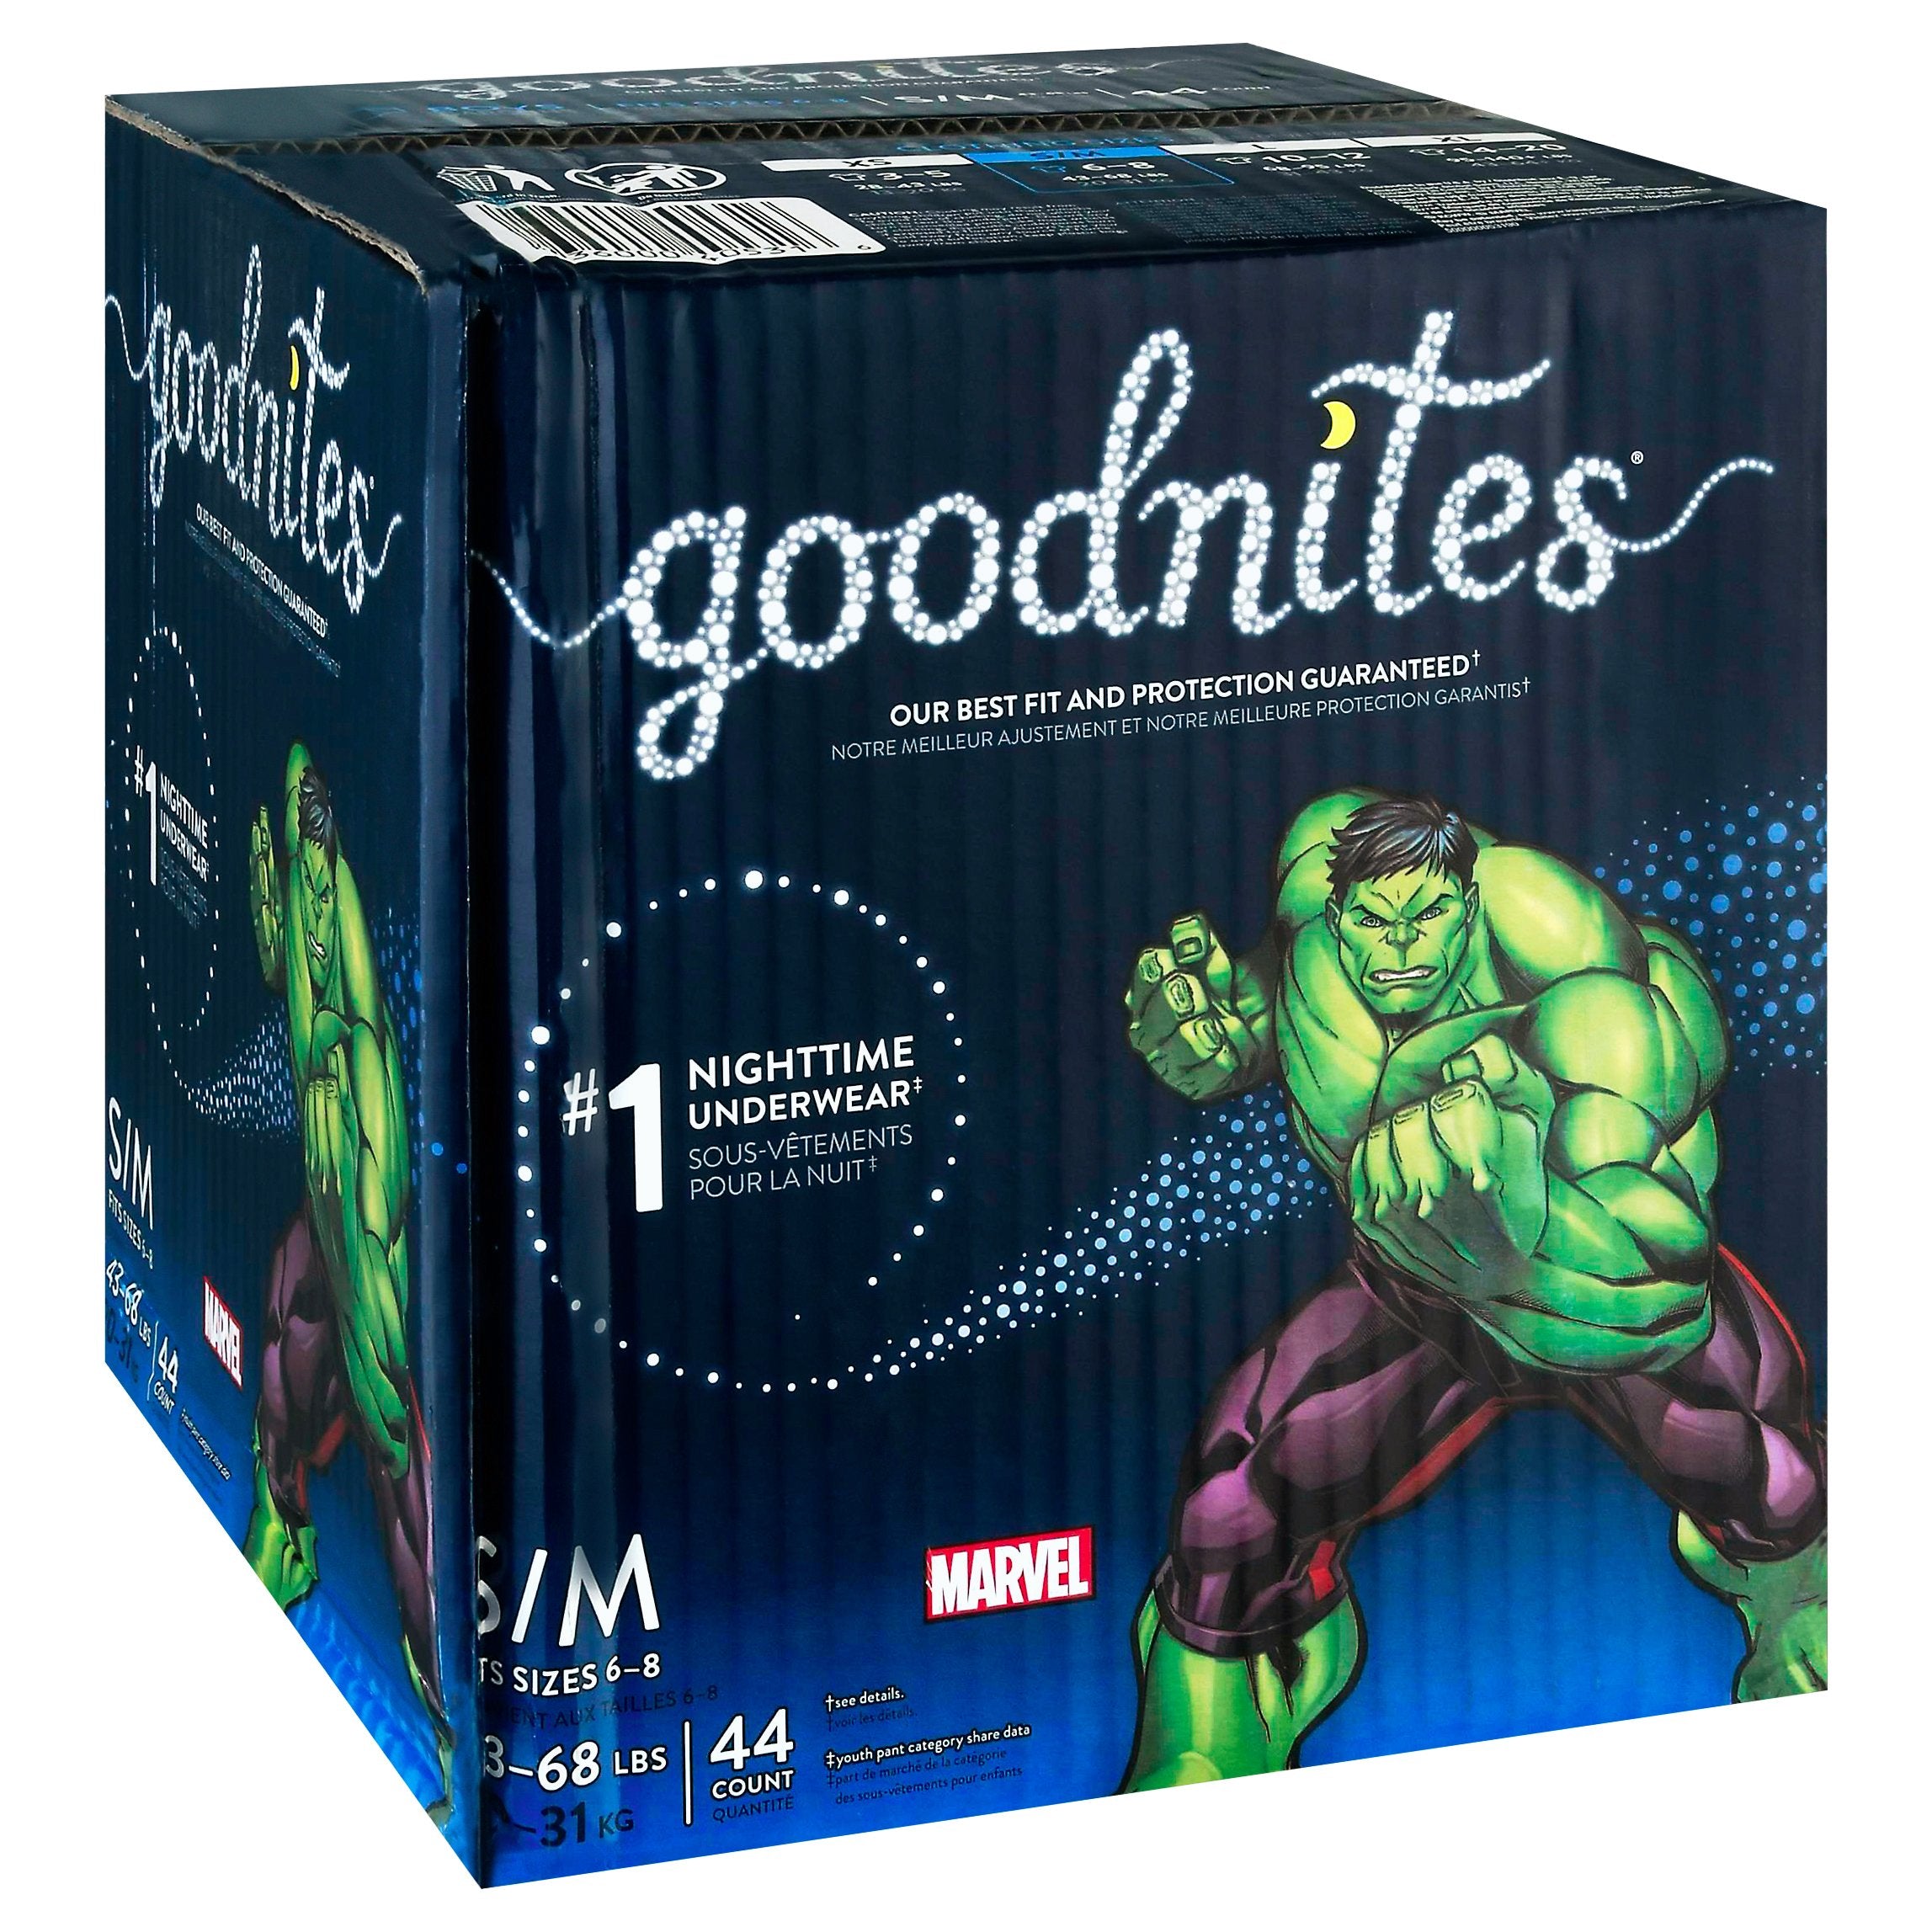 Goodnites Boys' Nighttime Bedwetting Underwear, Size S/M (43-68 lbs), 44 Ct